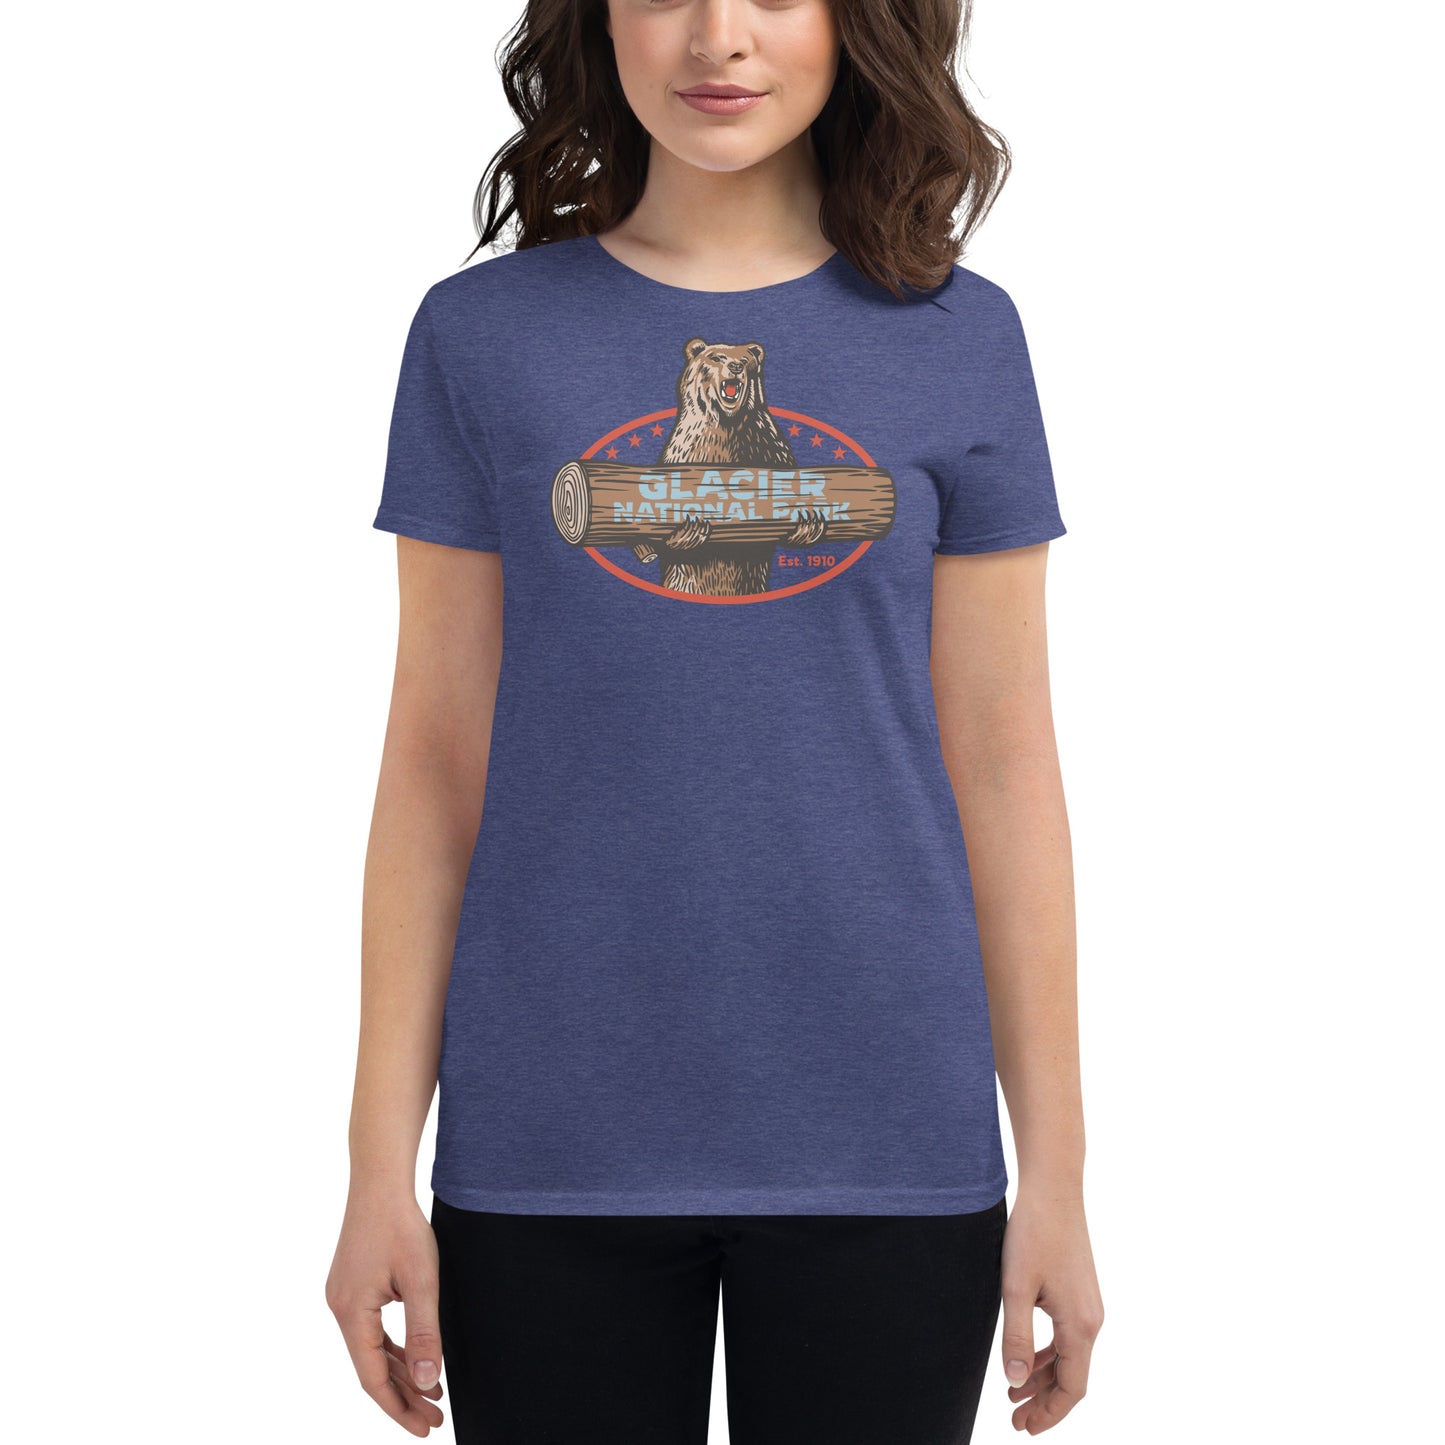 Women's Fashion Fit T-shirt - Glacier NP Bear and Log